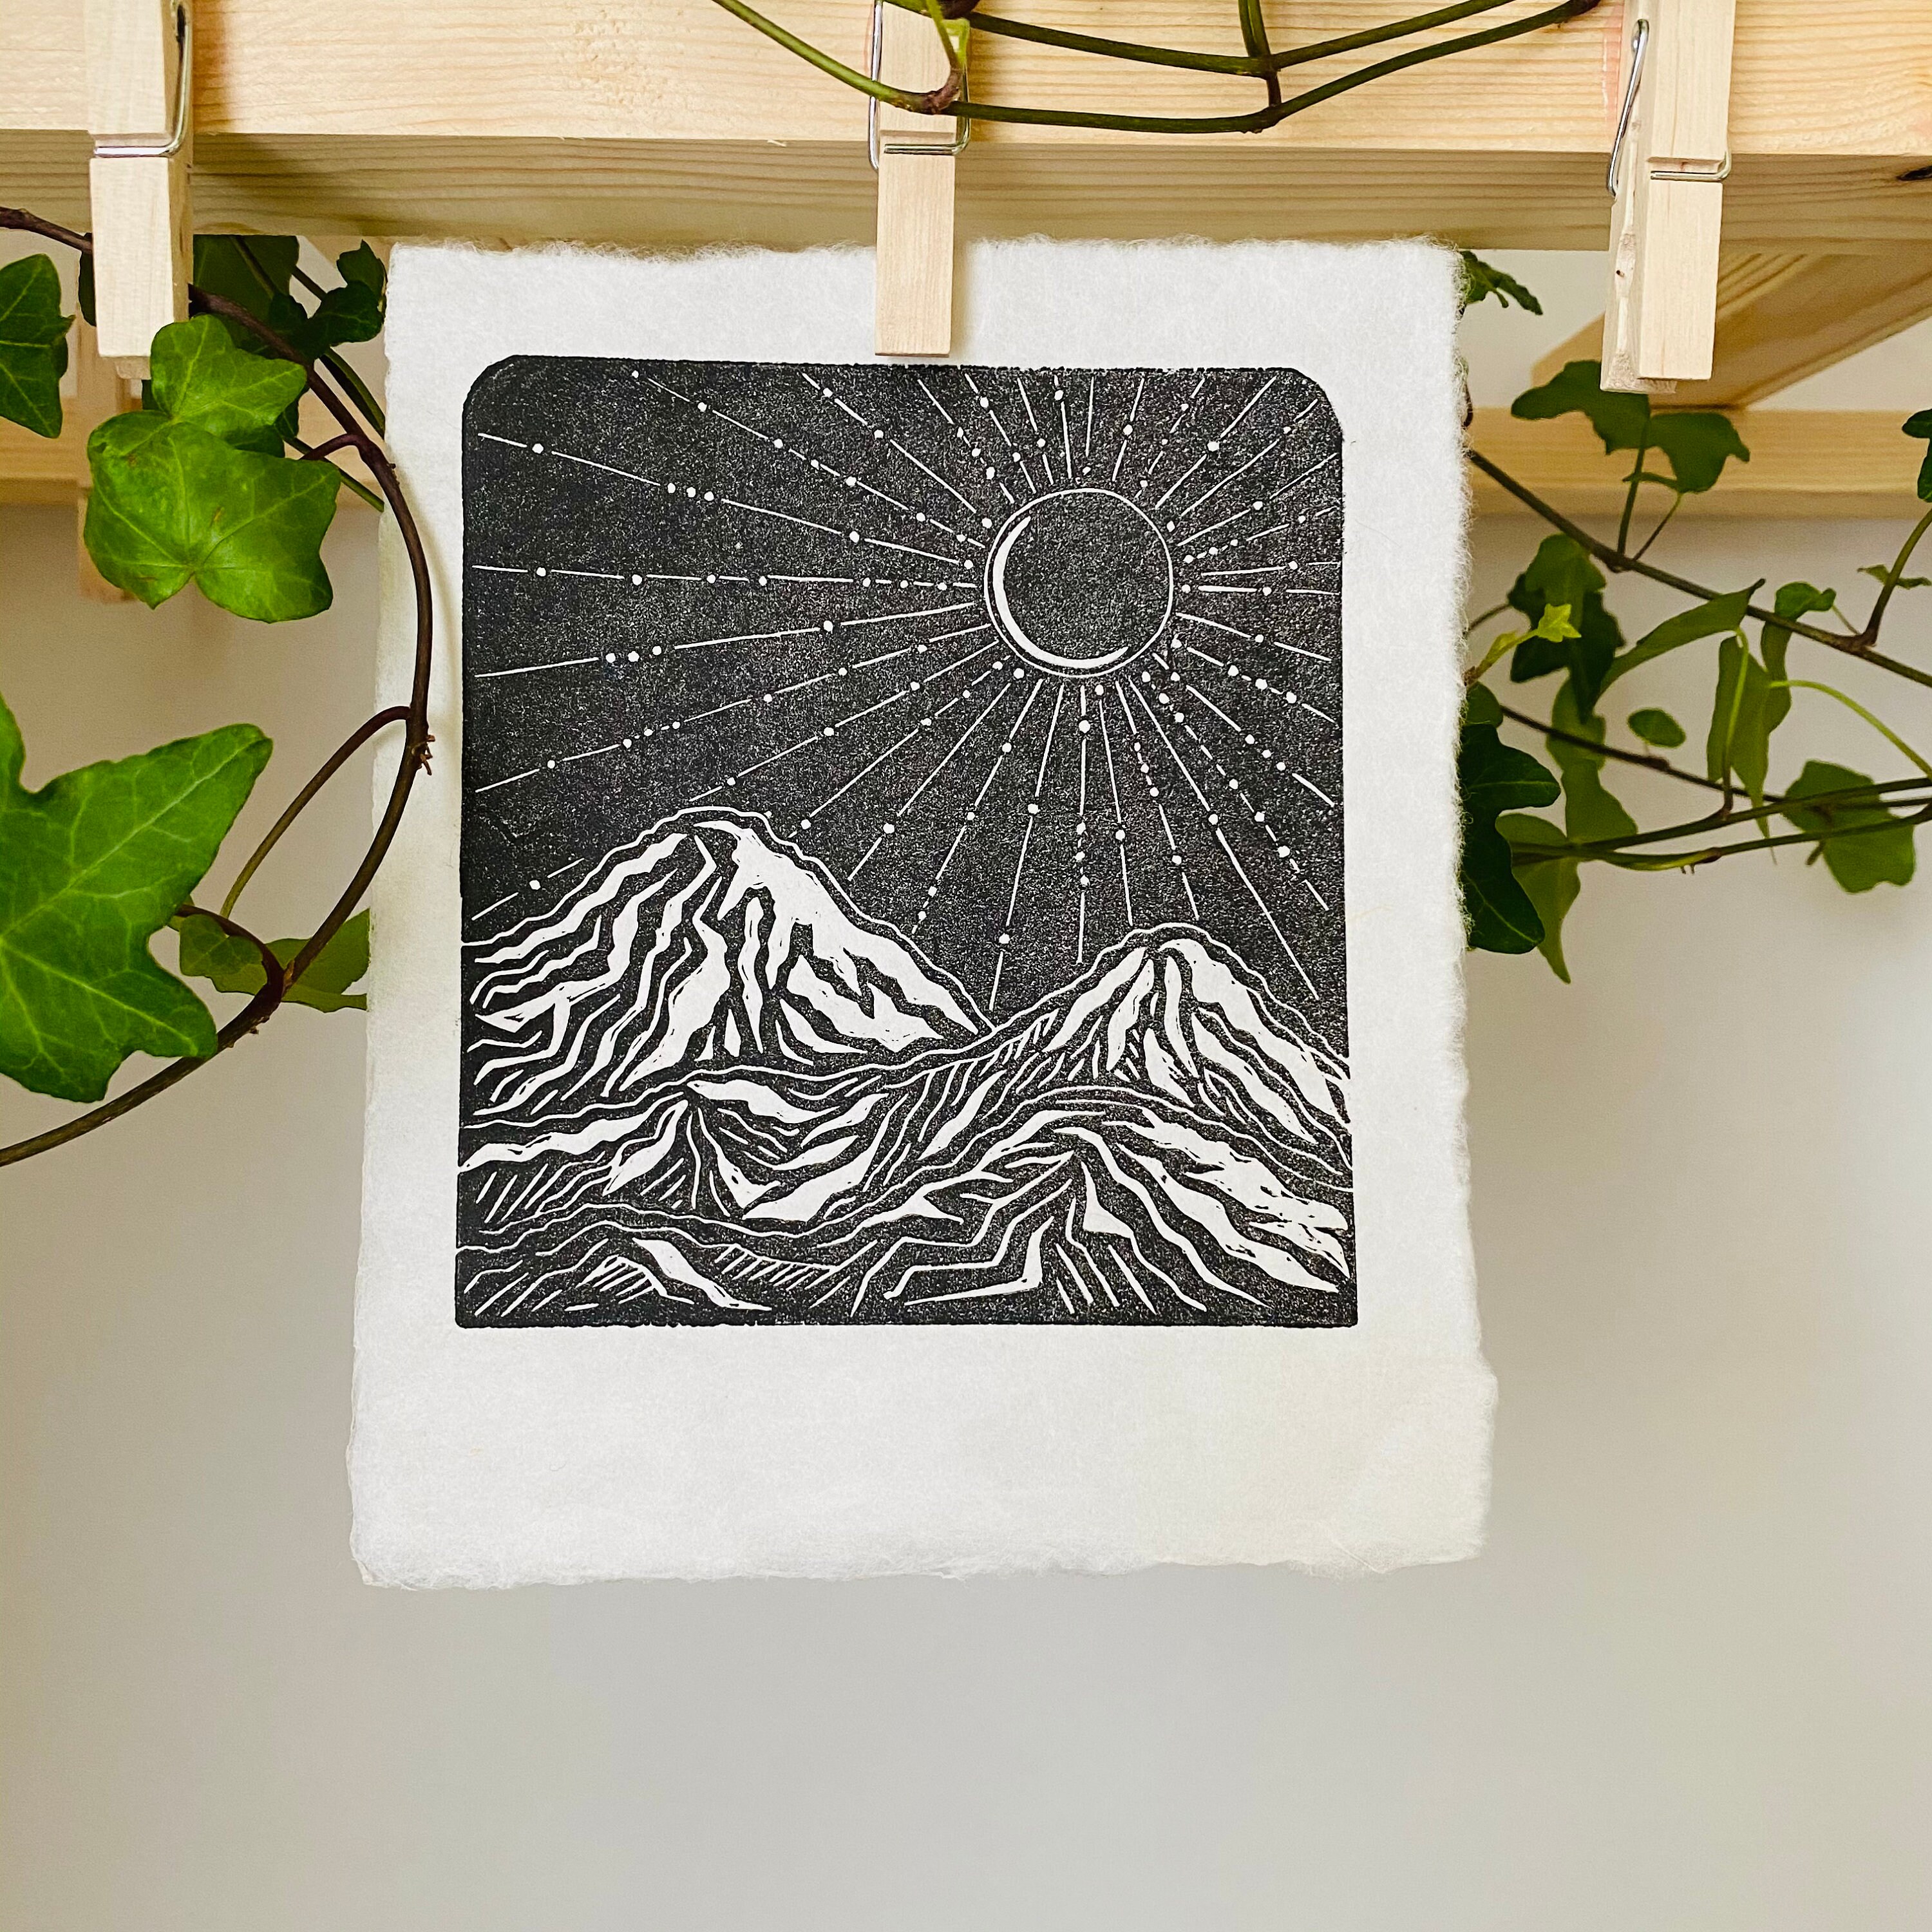 Early Light” 3 Inch Sticker, Linocut Block Print Eco-Friendly Sticke